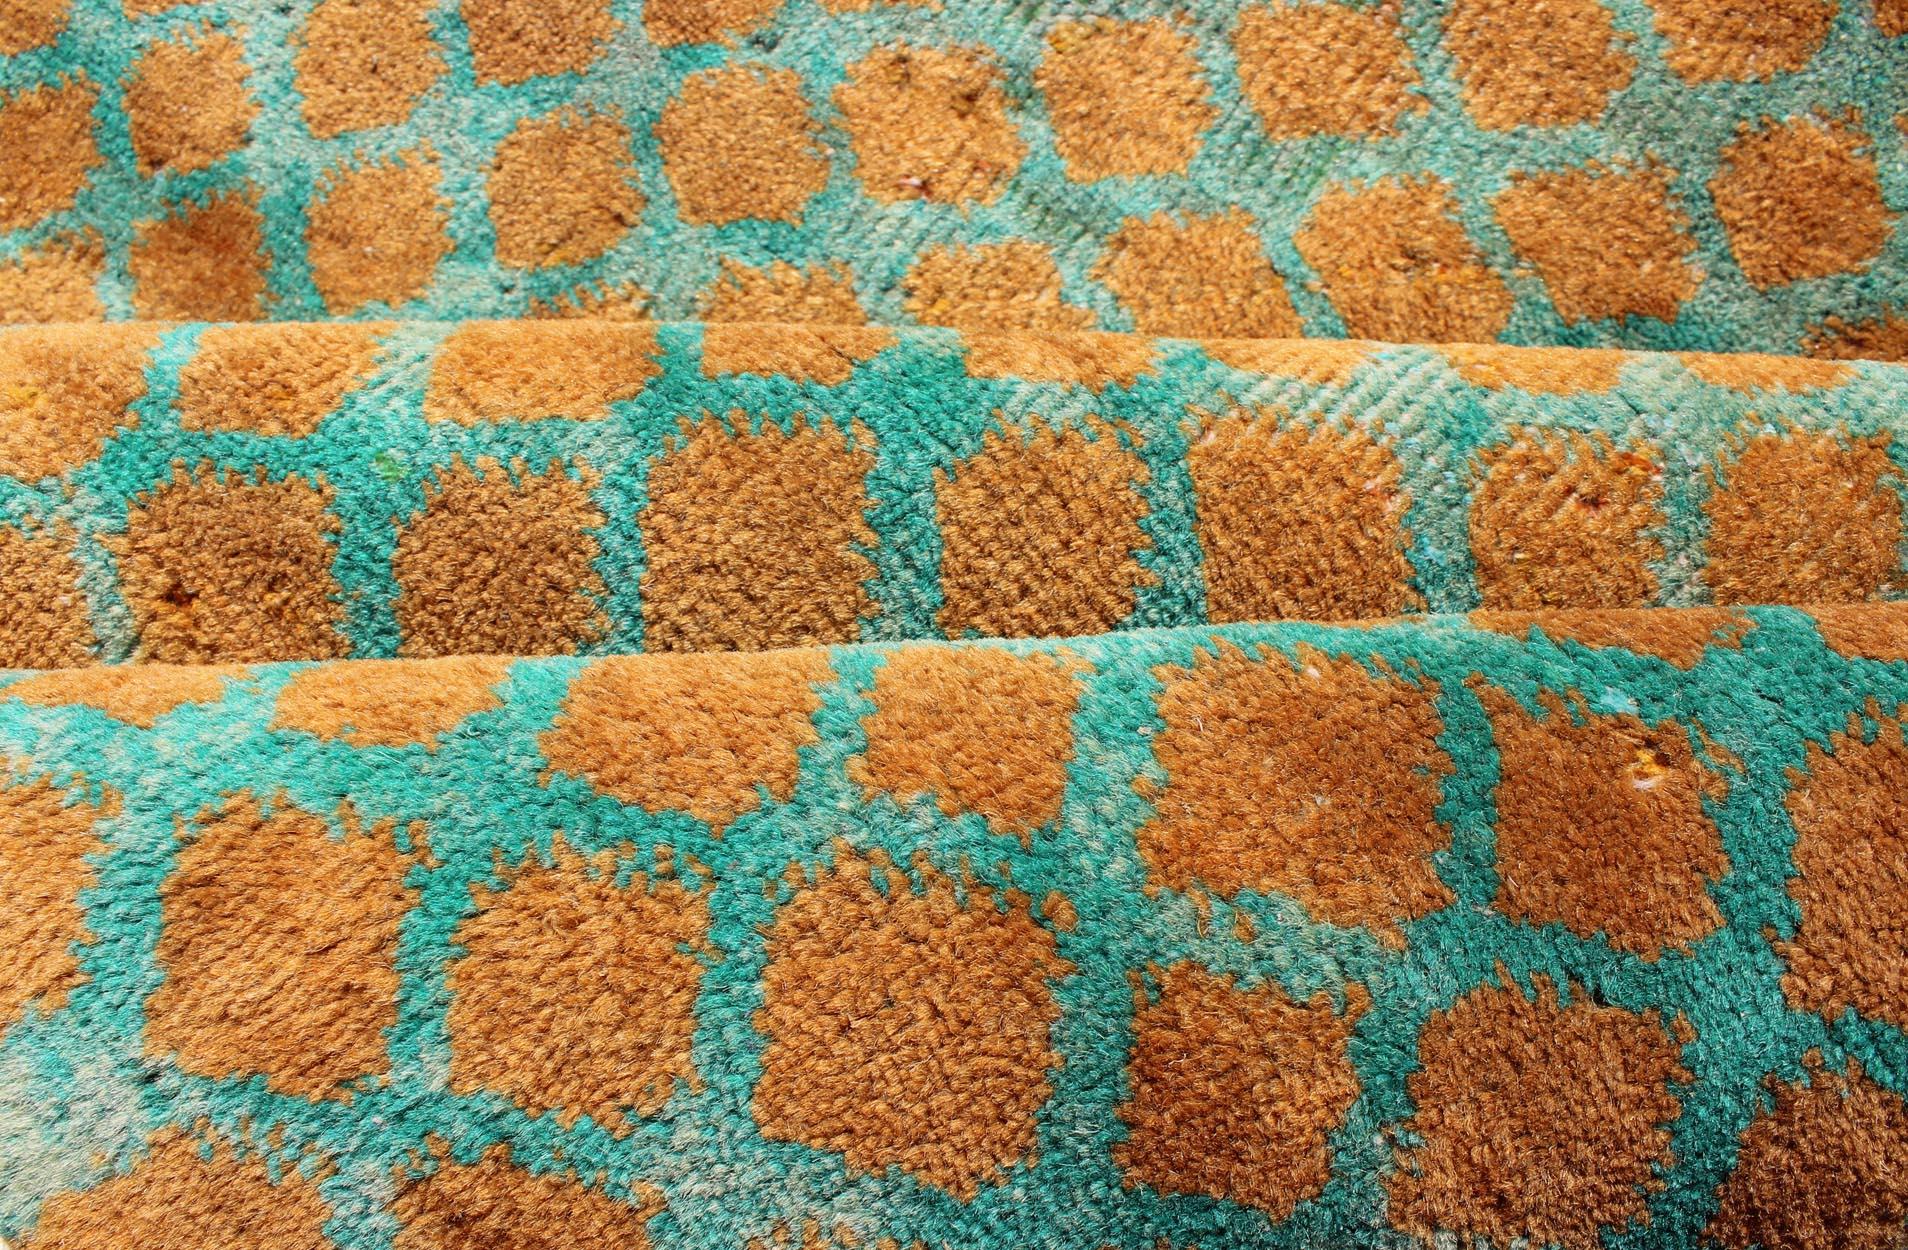 teal and orange rugs